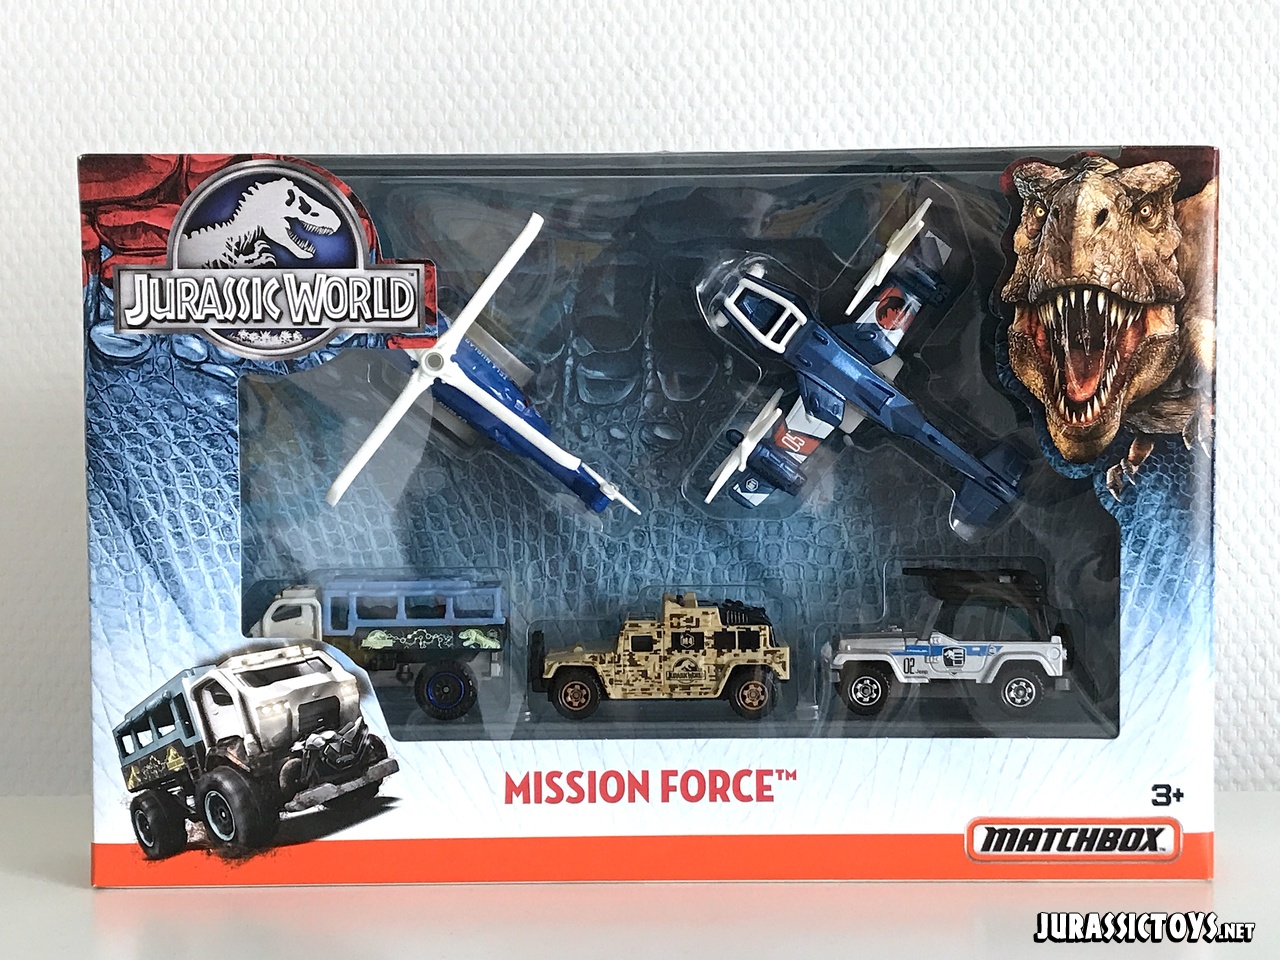 Jurassic World Mission Force Matchbox